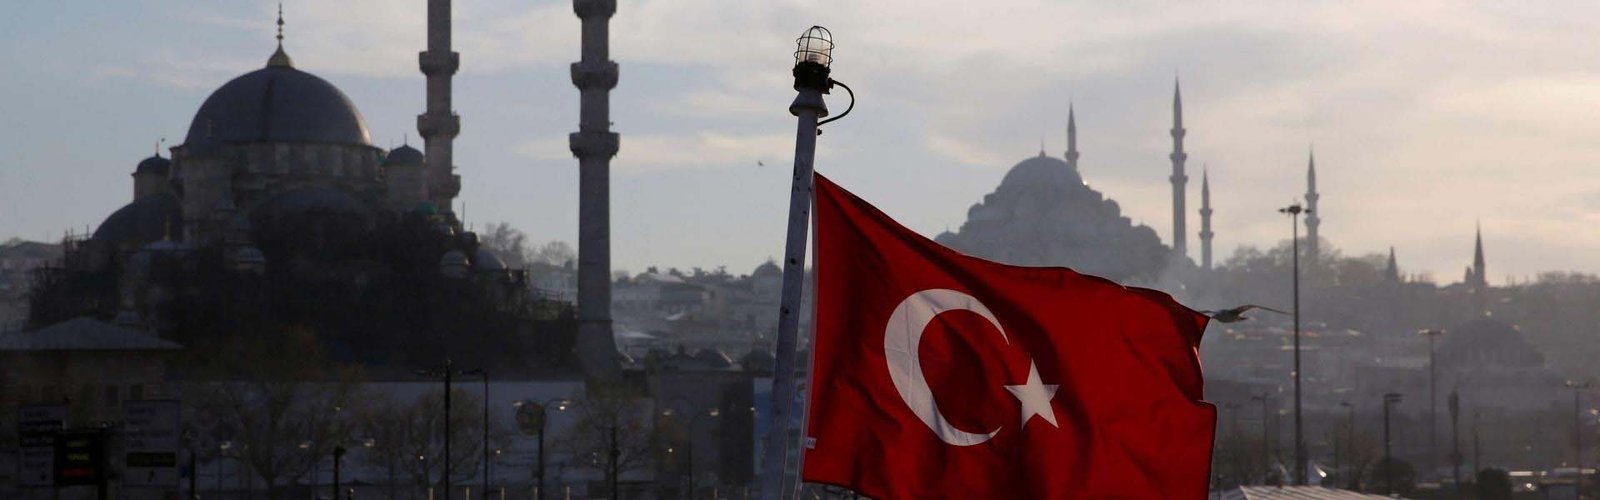 Idioma de Estambul - Frases en turco para turistas